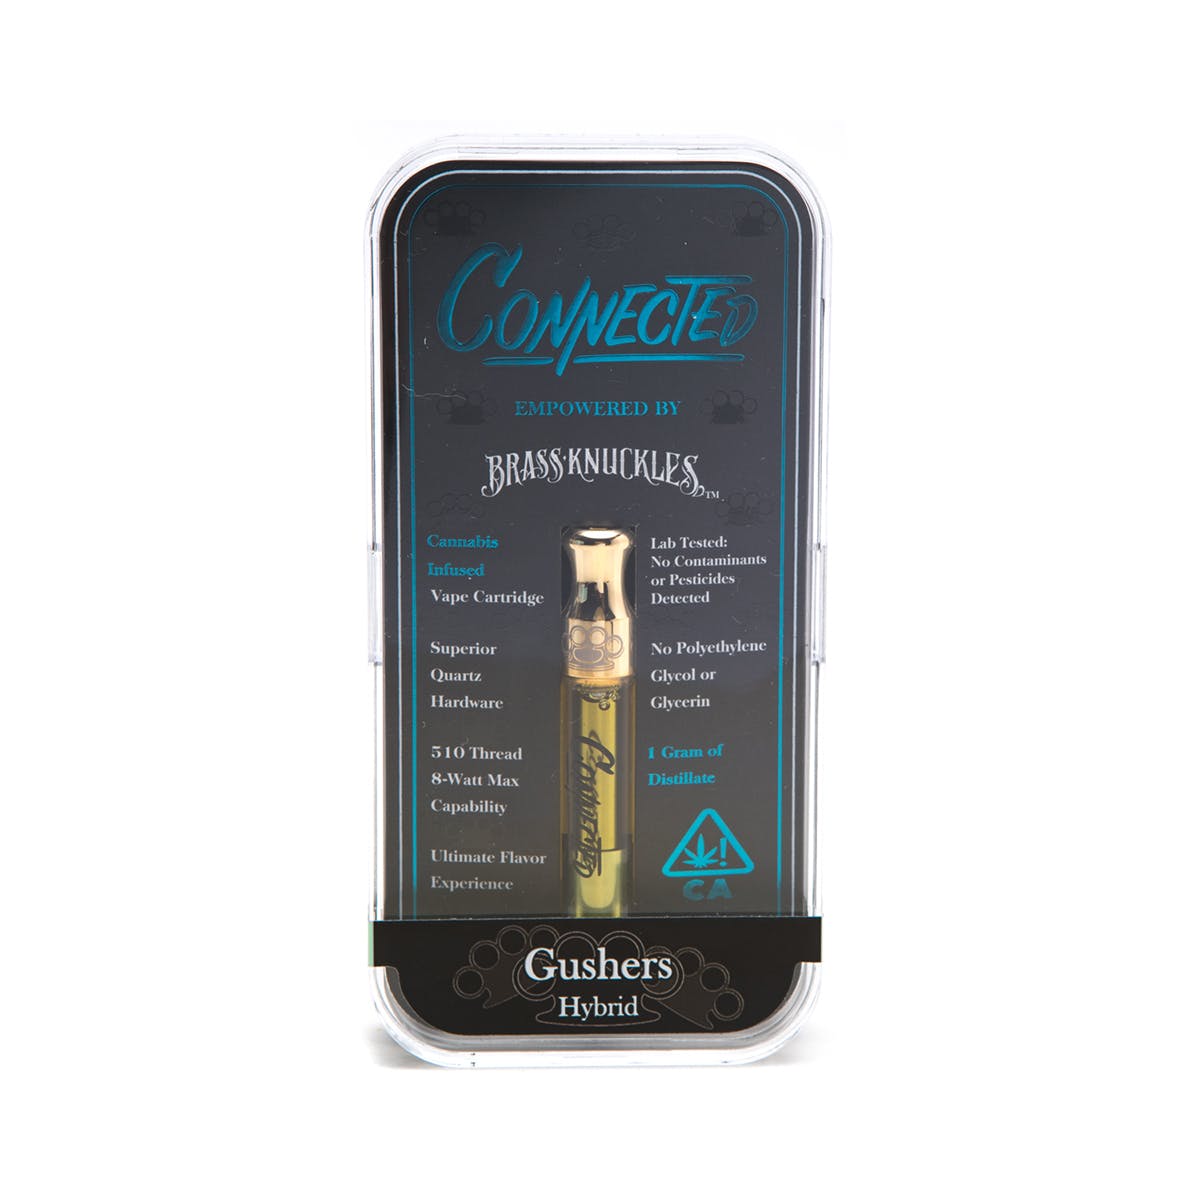 marijuana-dispensaries-hoover-greens-10g-for-2445-in-los-angeles-gushers-by-connected-cartridge